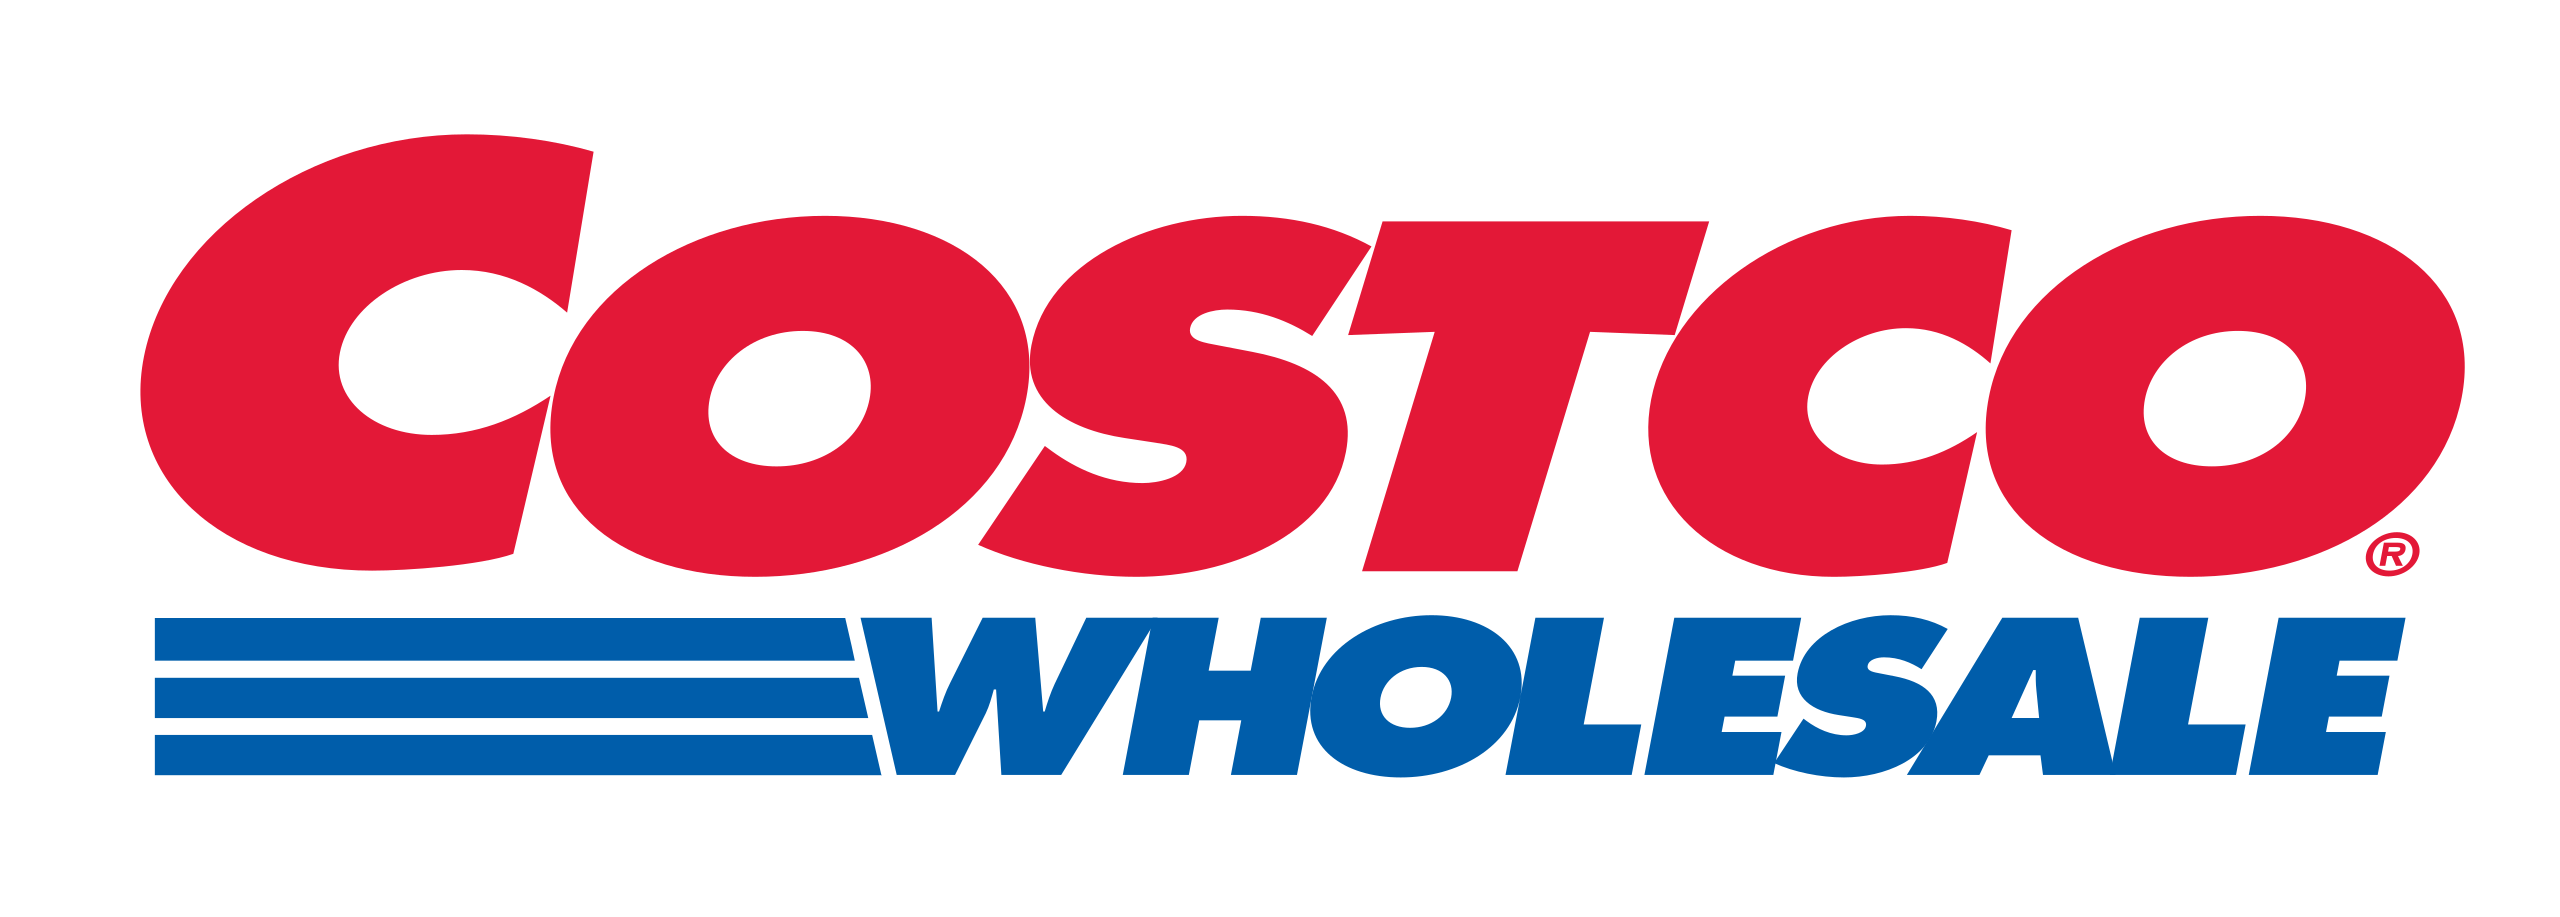 Costco_Wholesale_logo